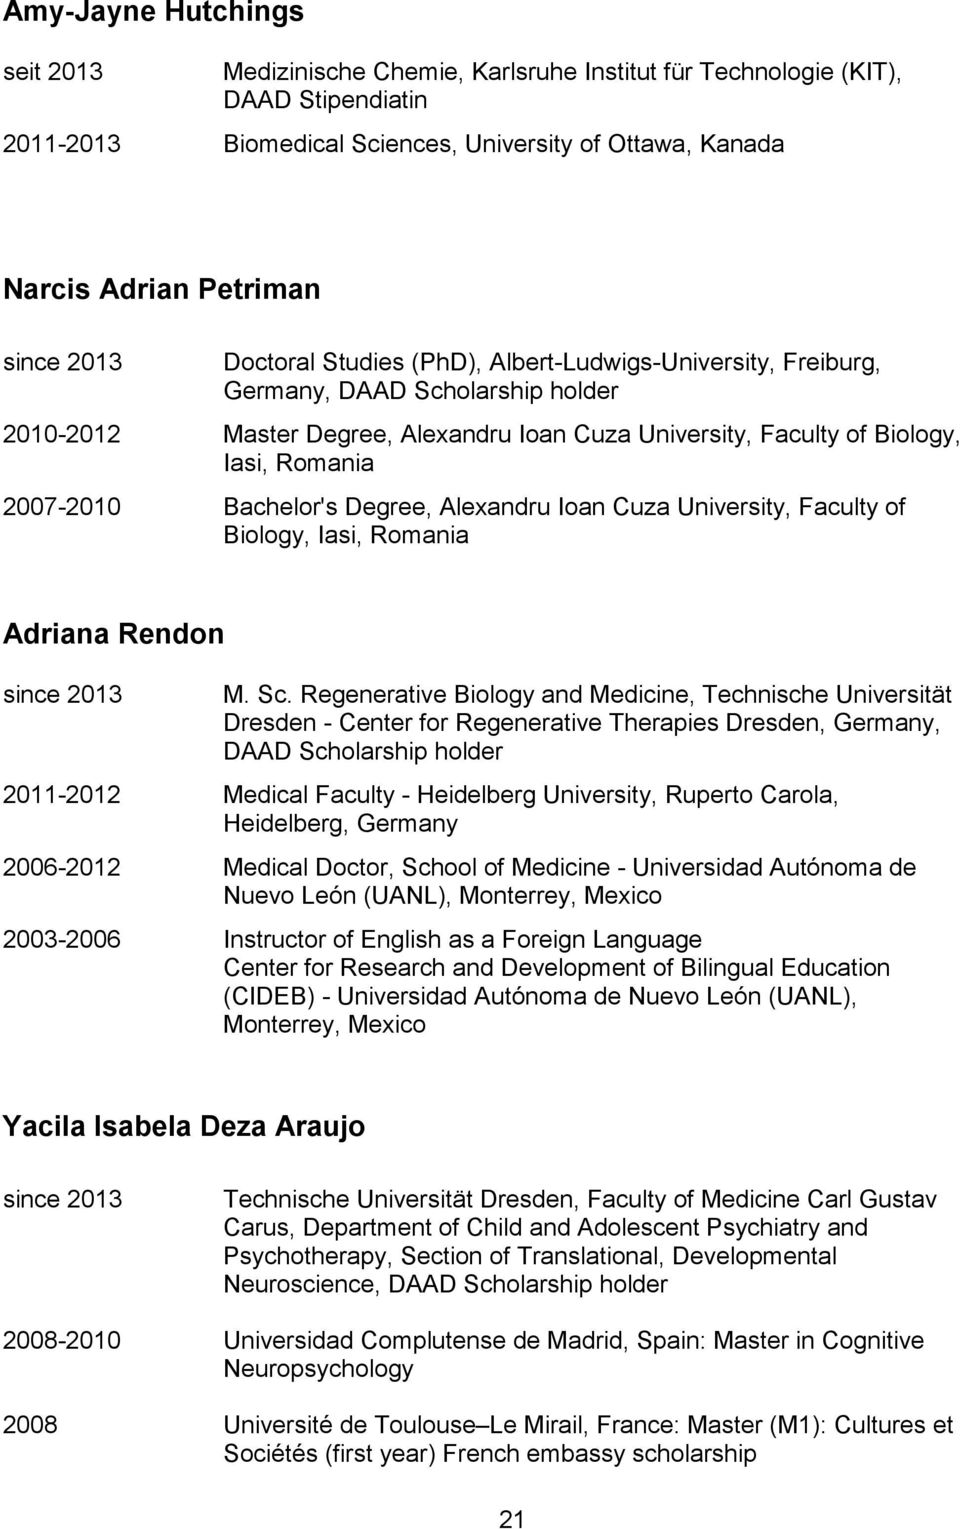 Bachelor's Degree, Alexandru Ioan Cuza University, Faculty of Biology, Iasi, Romania Adriana Rendon since 2013 M. Sc.